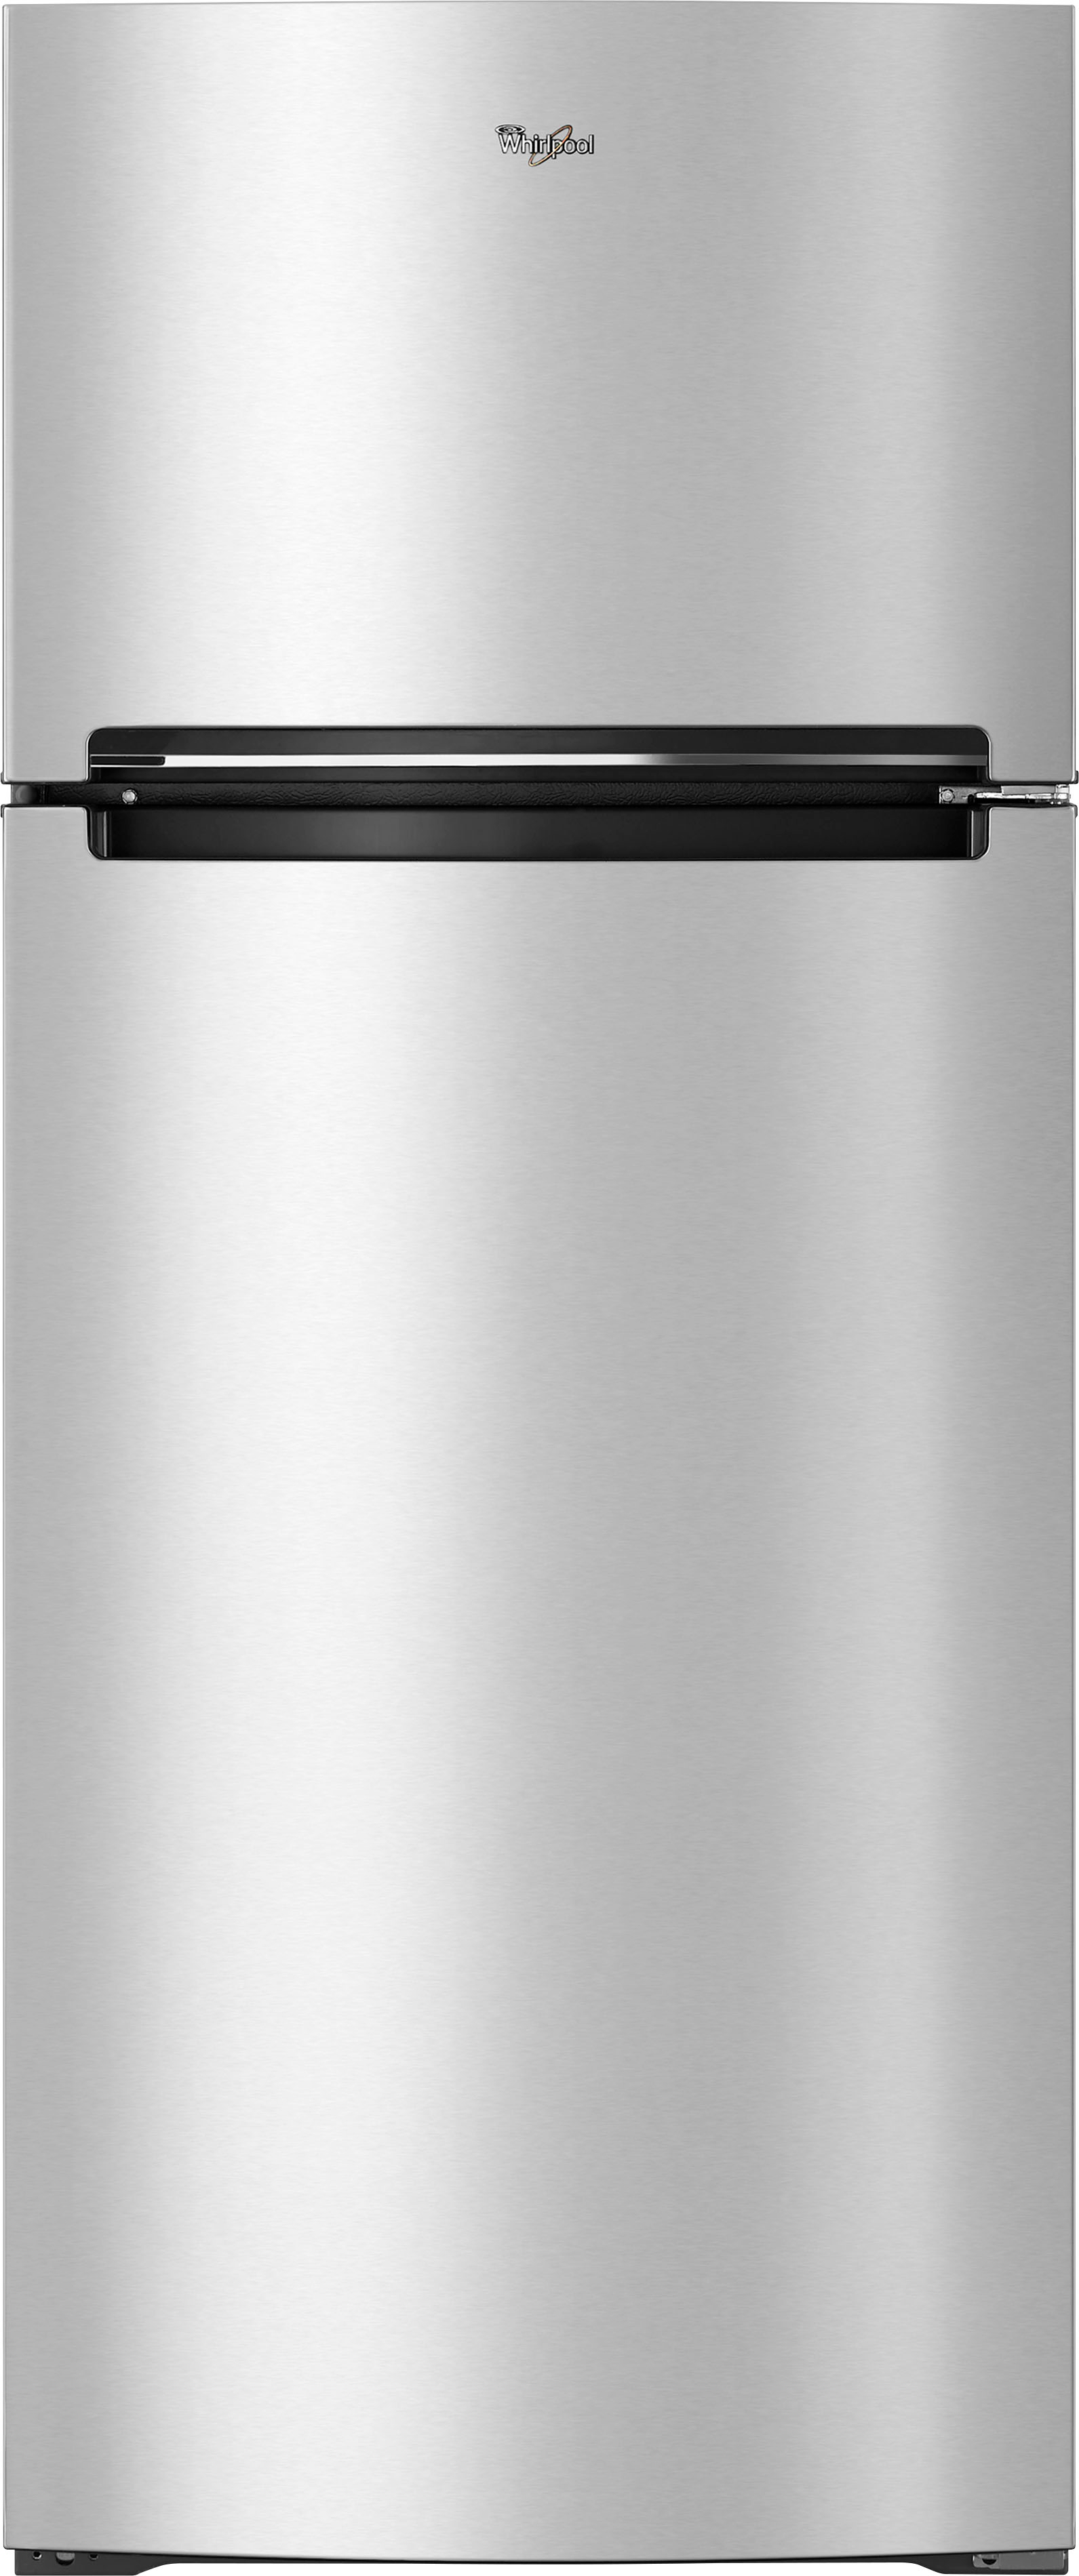 Whirlpool 17.7 Cu. Ft. Top-Freezer Refrigerator Monochromatic Stainless Whirlpool 17.7 Cu Ft Top Freezer Refrigerator Monochromatic Stainless Steel